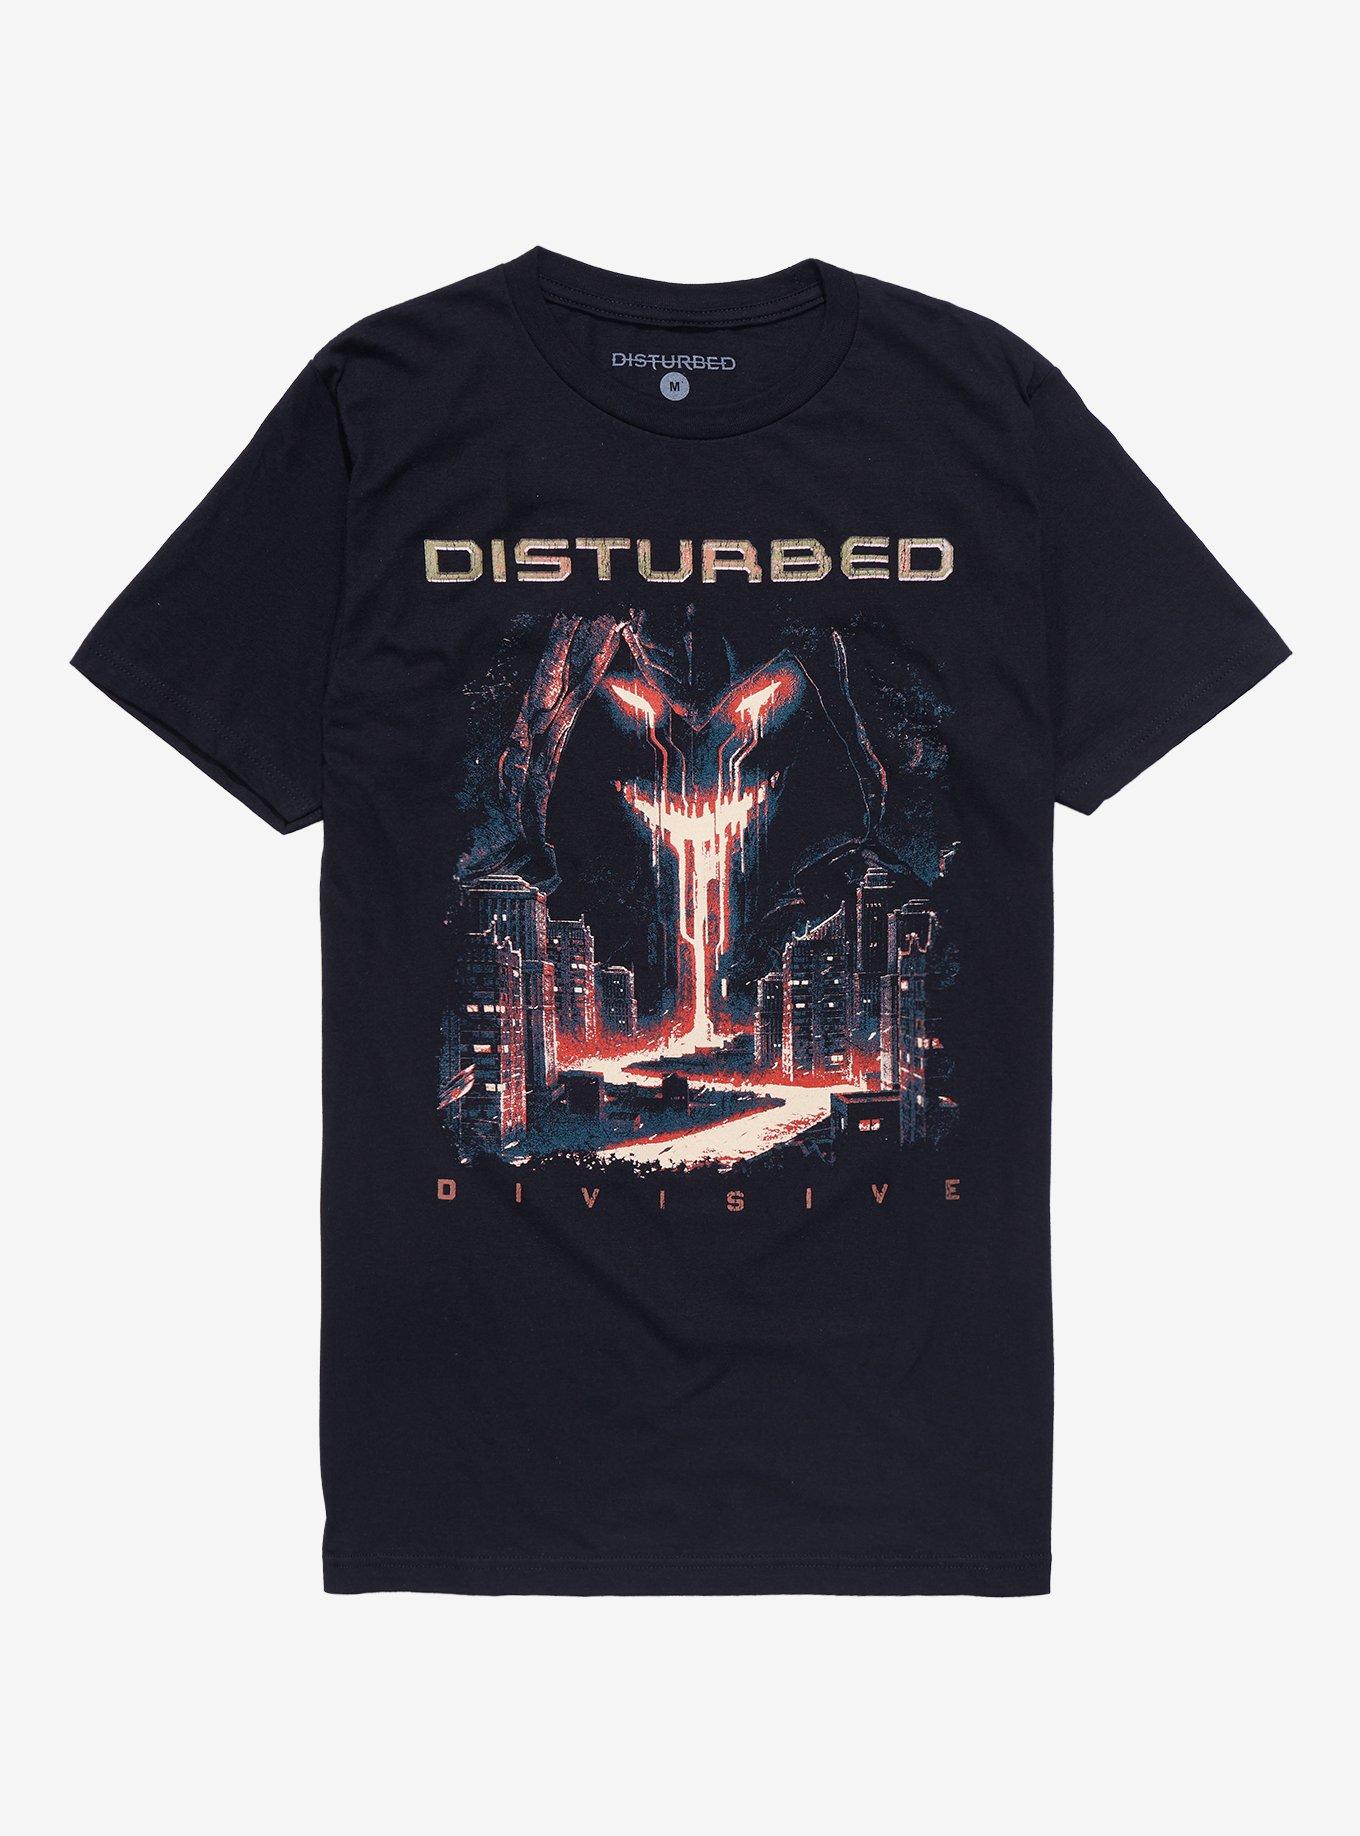 Disturbed Divisive Album Cover Tracklisting T-Shirt, BLACK, hi-res